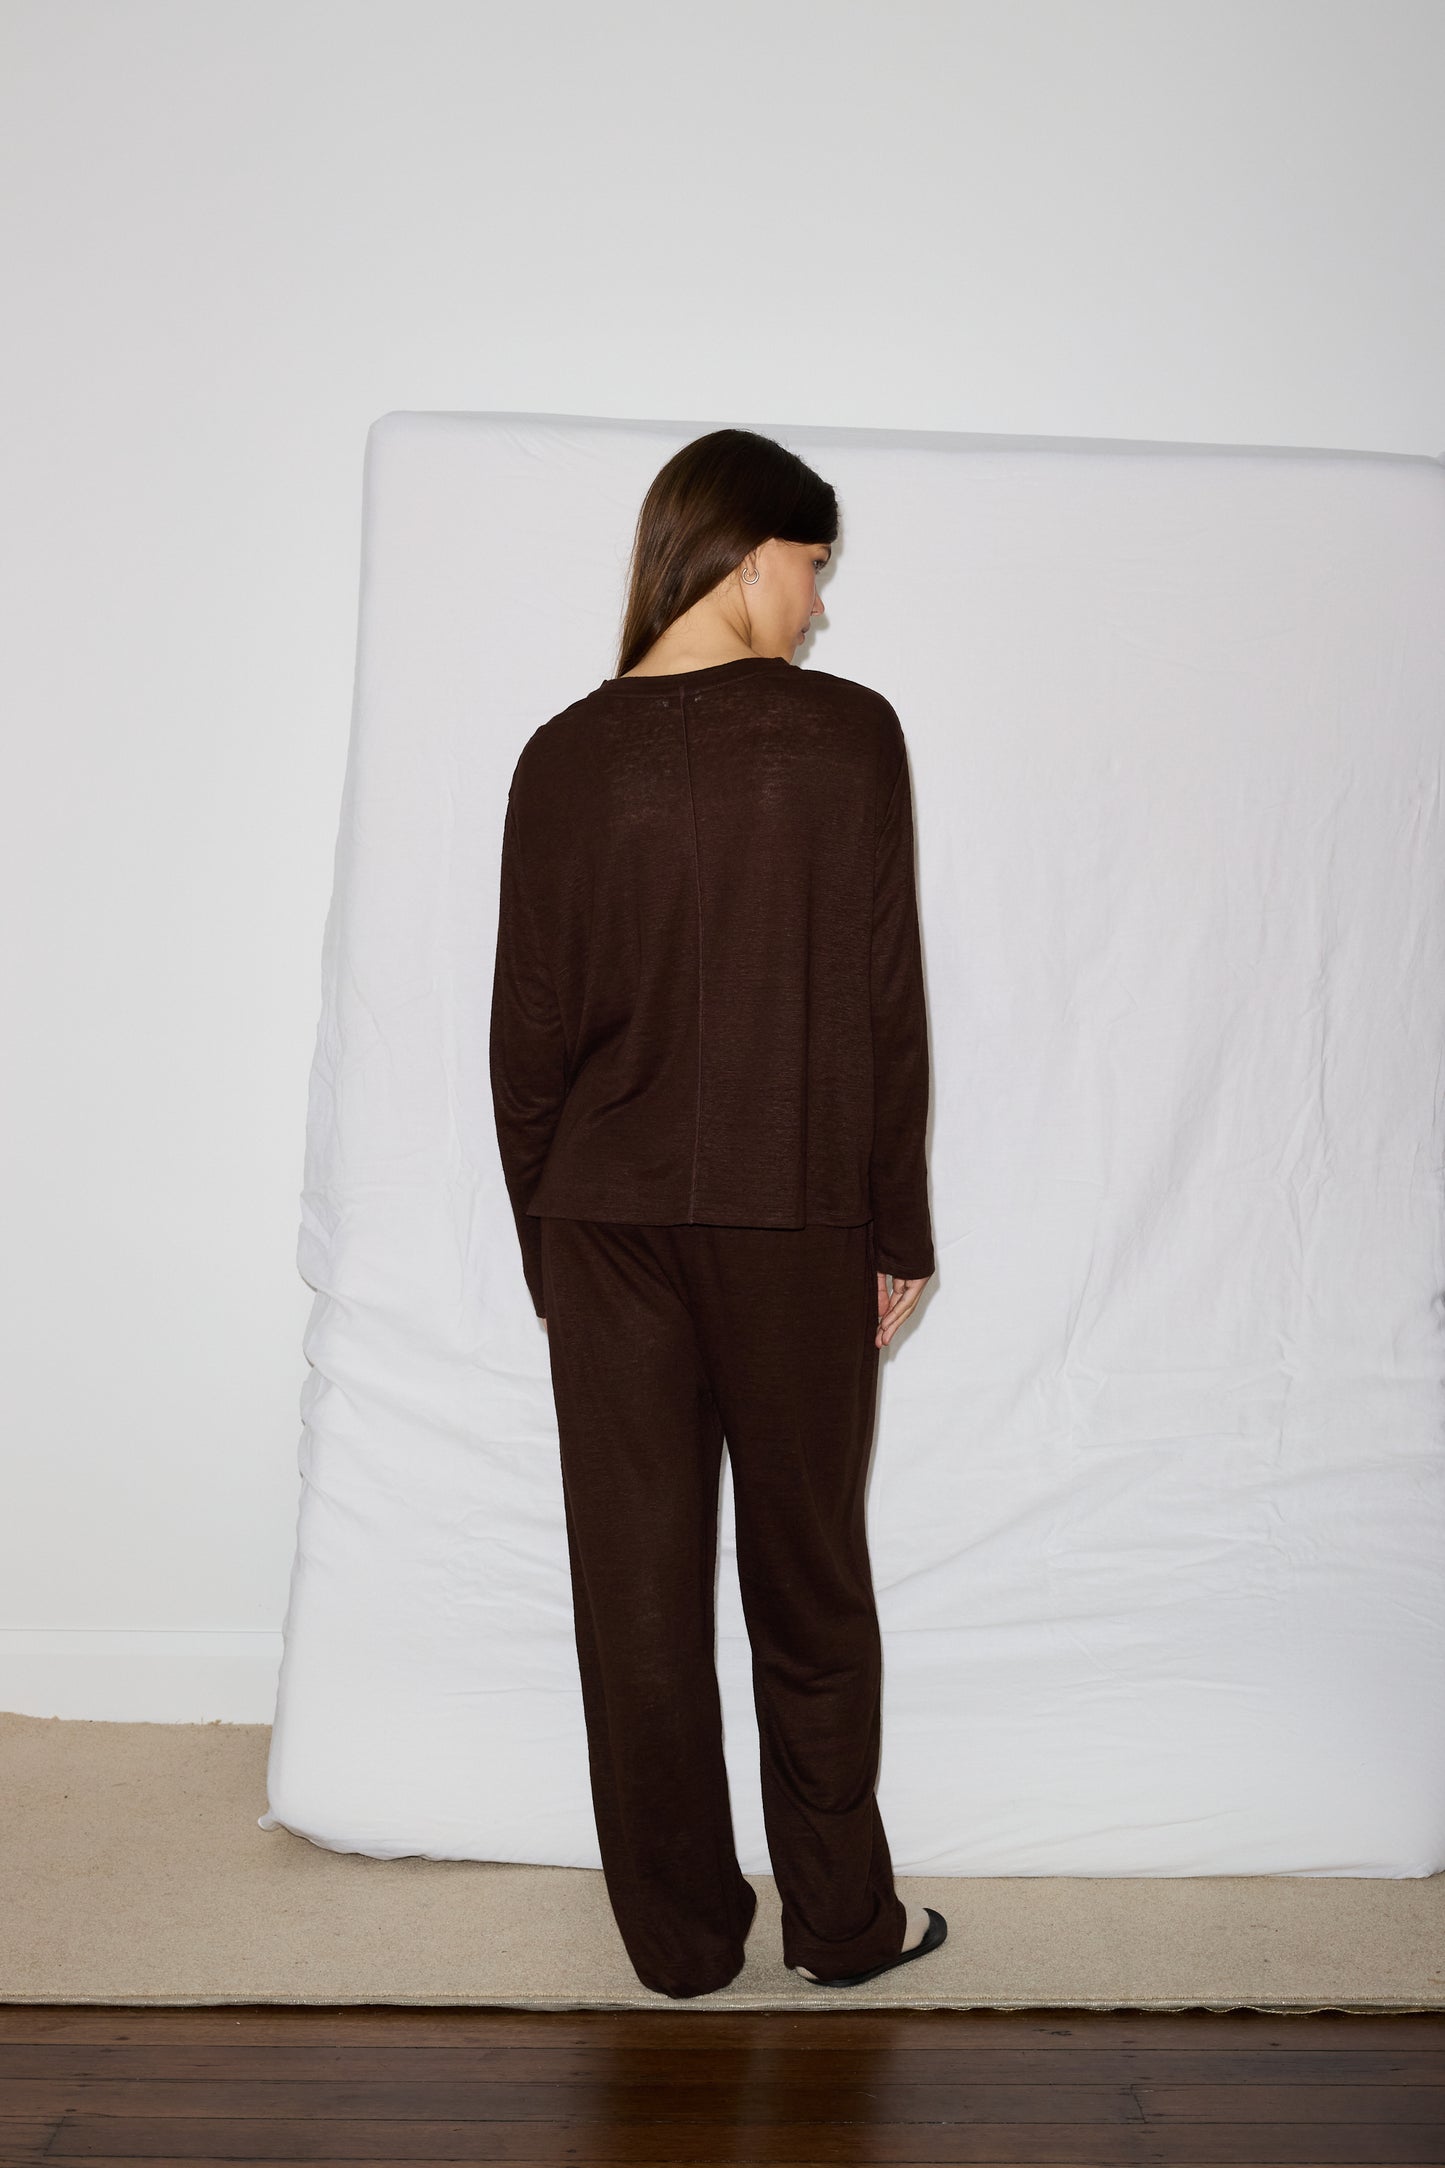 Female model wearing soft pant - chocolate by Deiji Studios against plain background